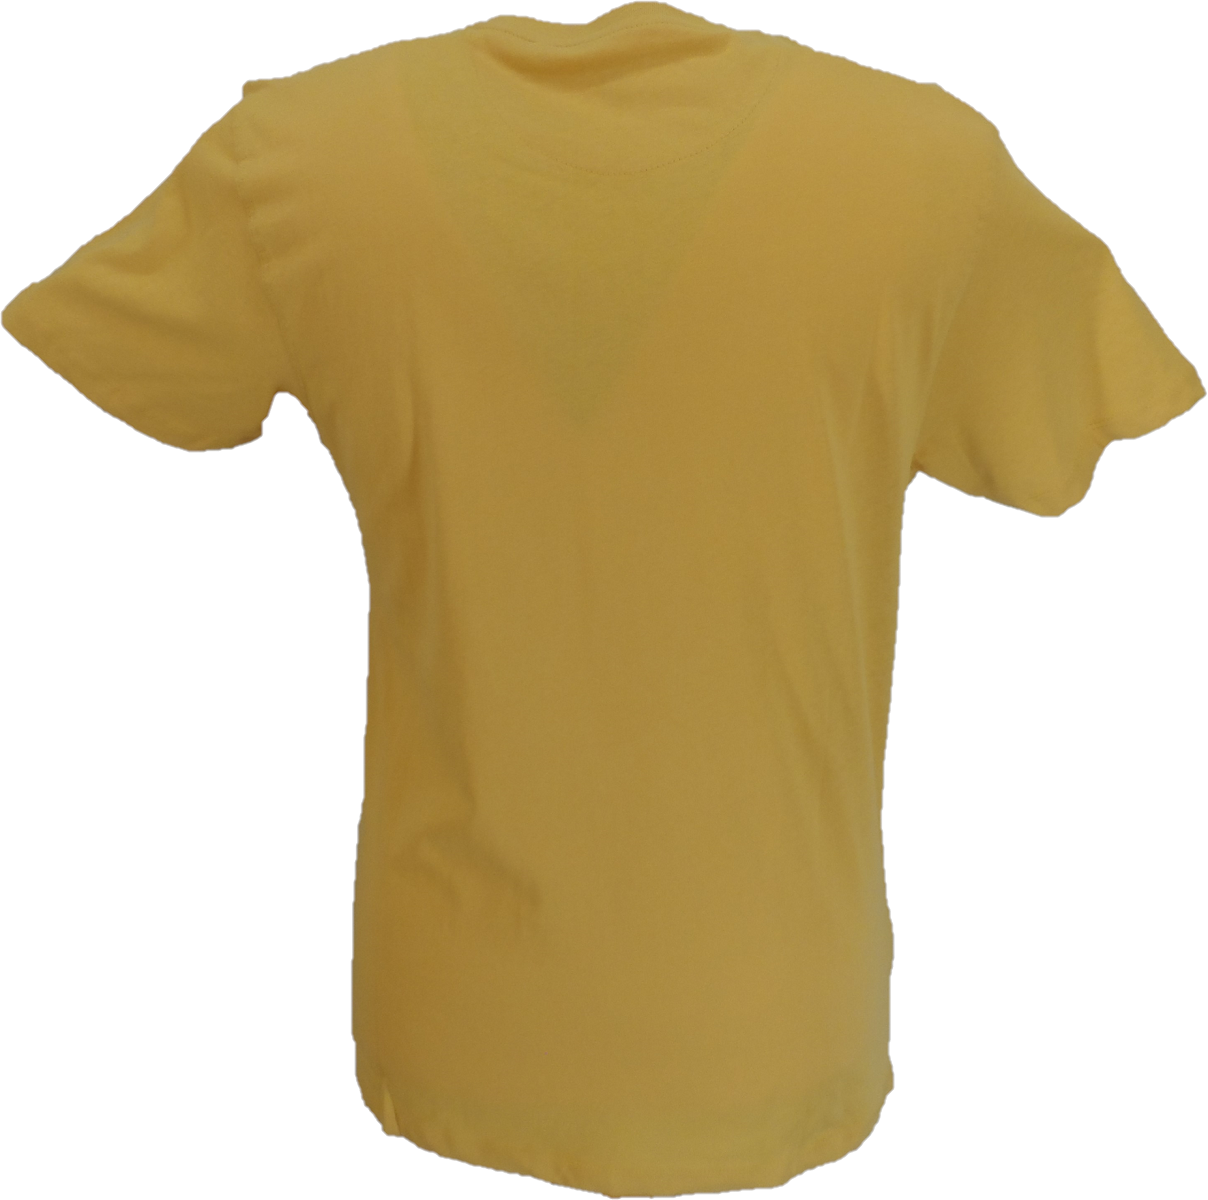 Lambretta Mens Gold Paisley 100% Cotton T-Shirt